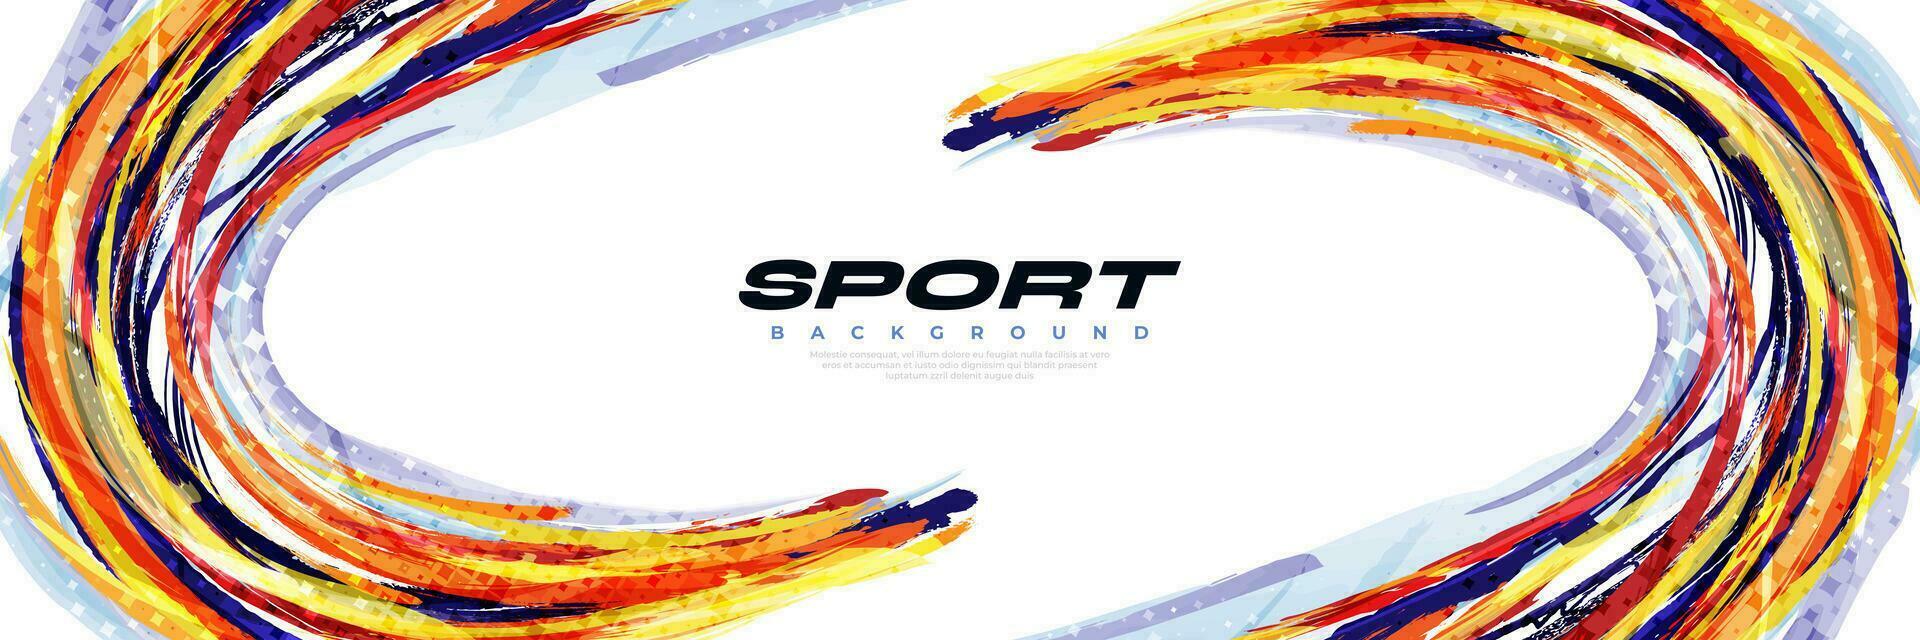 Colorful Brush Splash Background. Vibrant Grunge Background with Halftone Style. Sport Banner. Vector Illustration